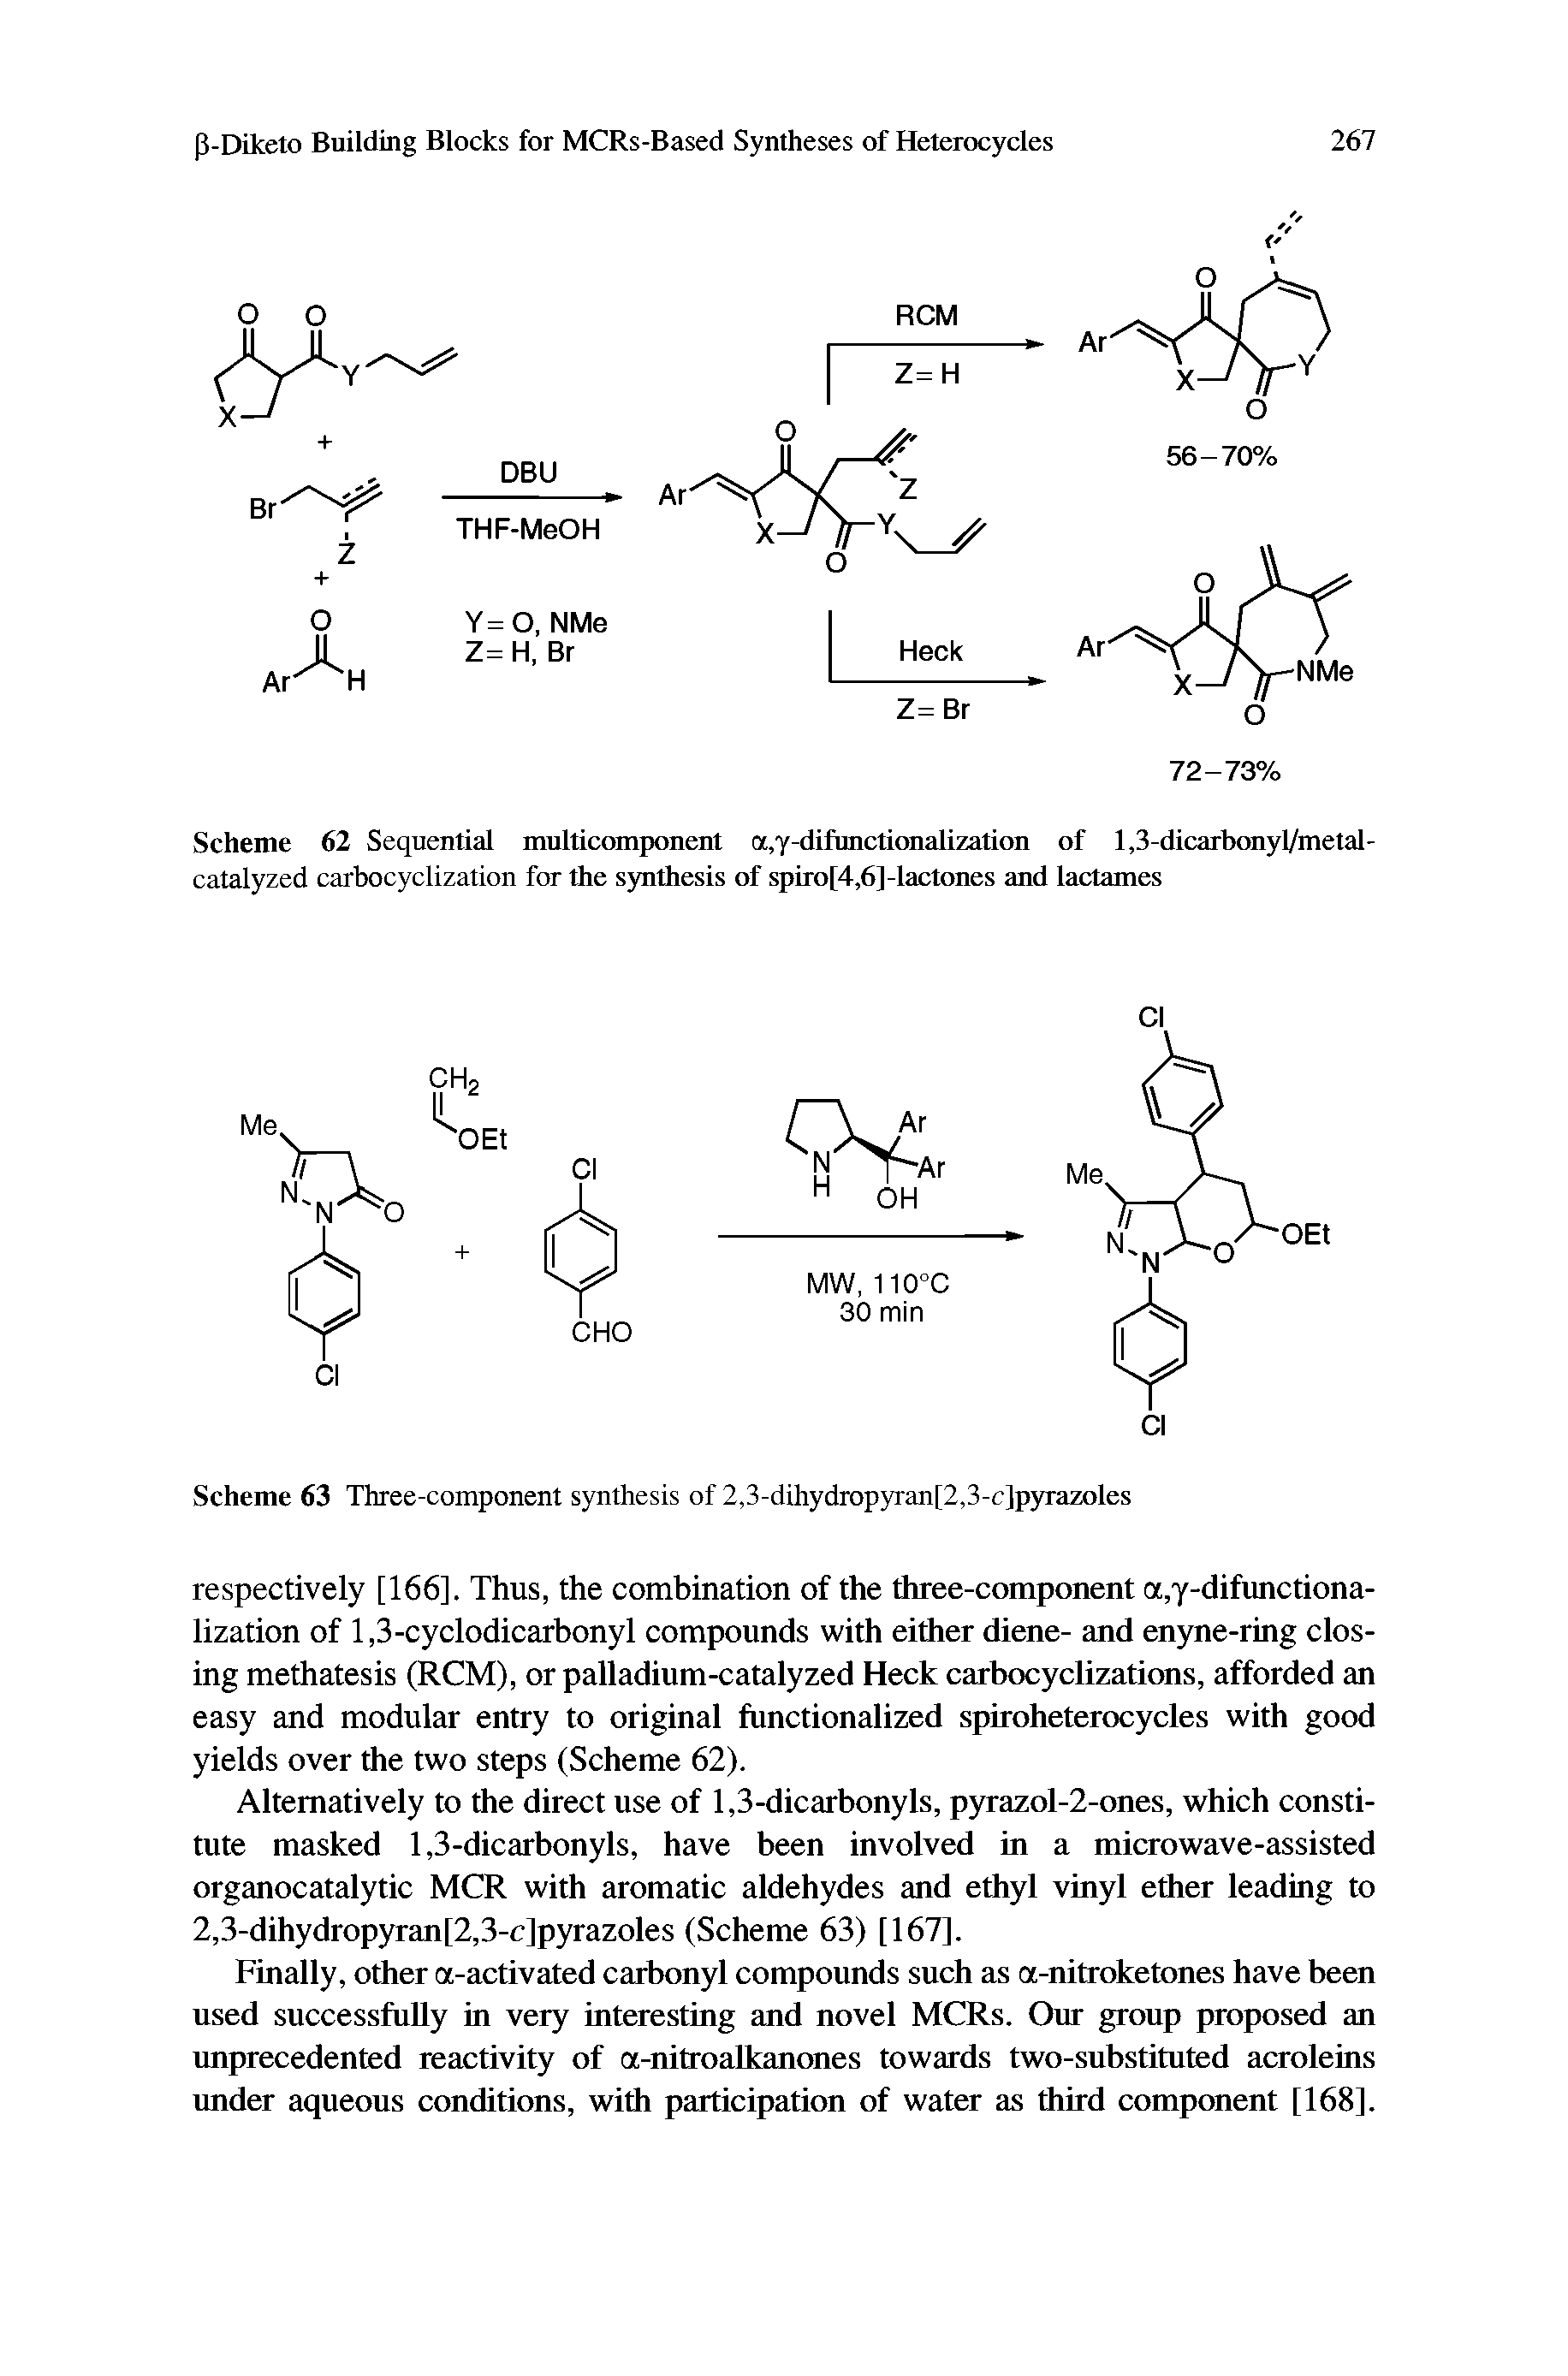 Scheme 63 Three-component synthesis of 2,3-dihydropyran[2,3-c]pyrazoles...